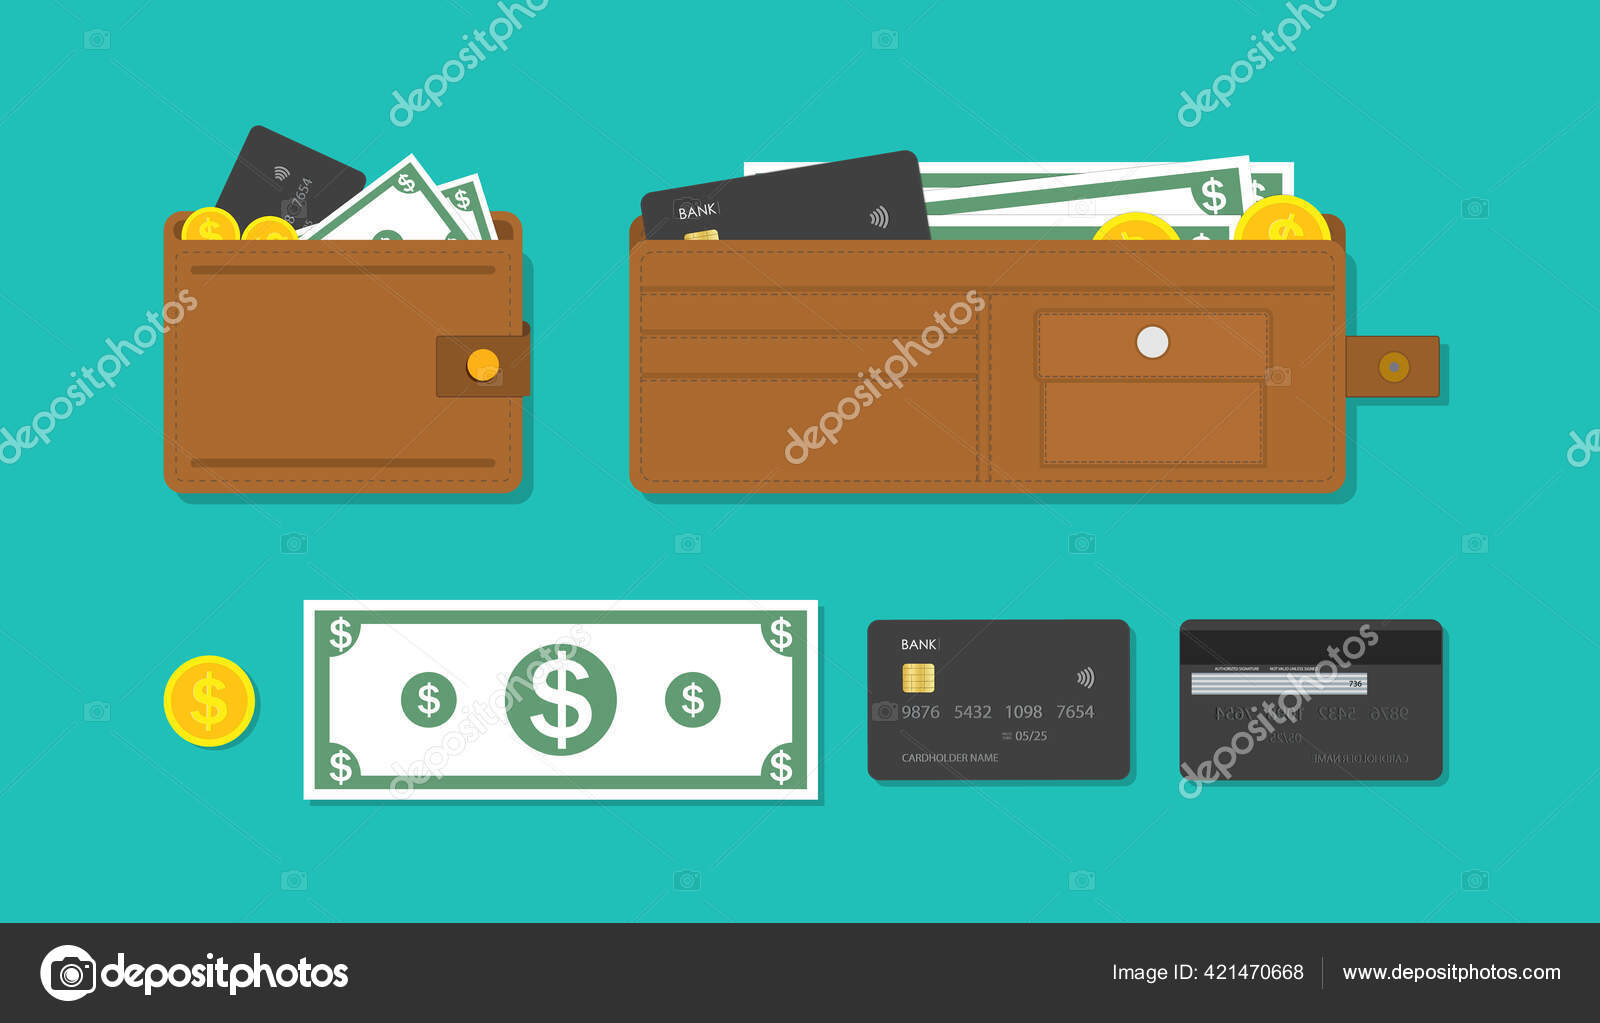 depositphotos 421470668 stock illustration wallet card cash money icon